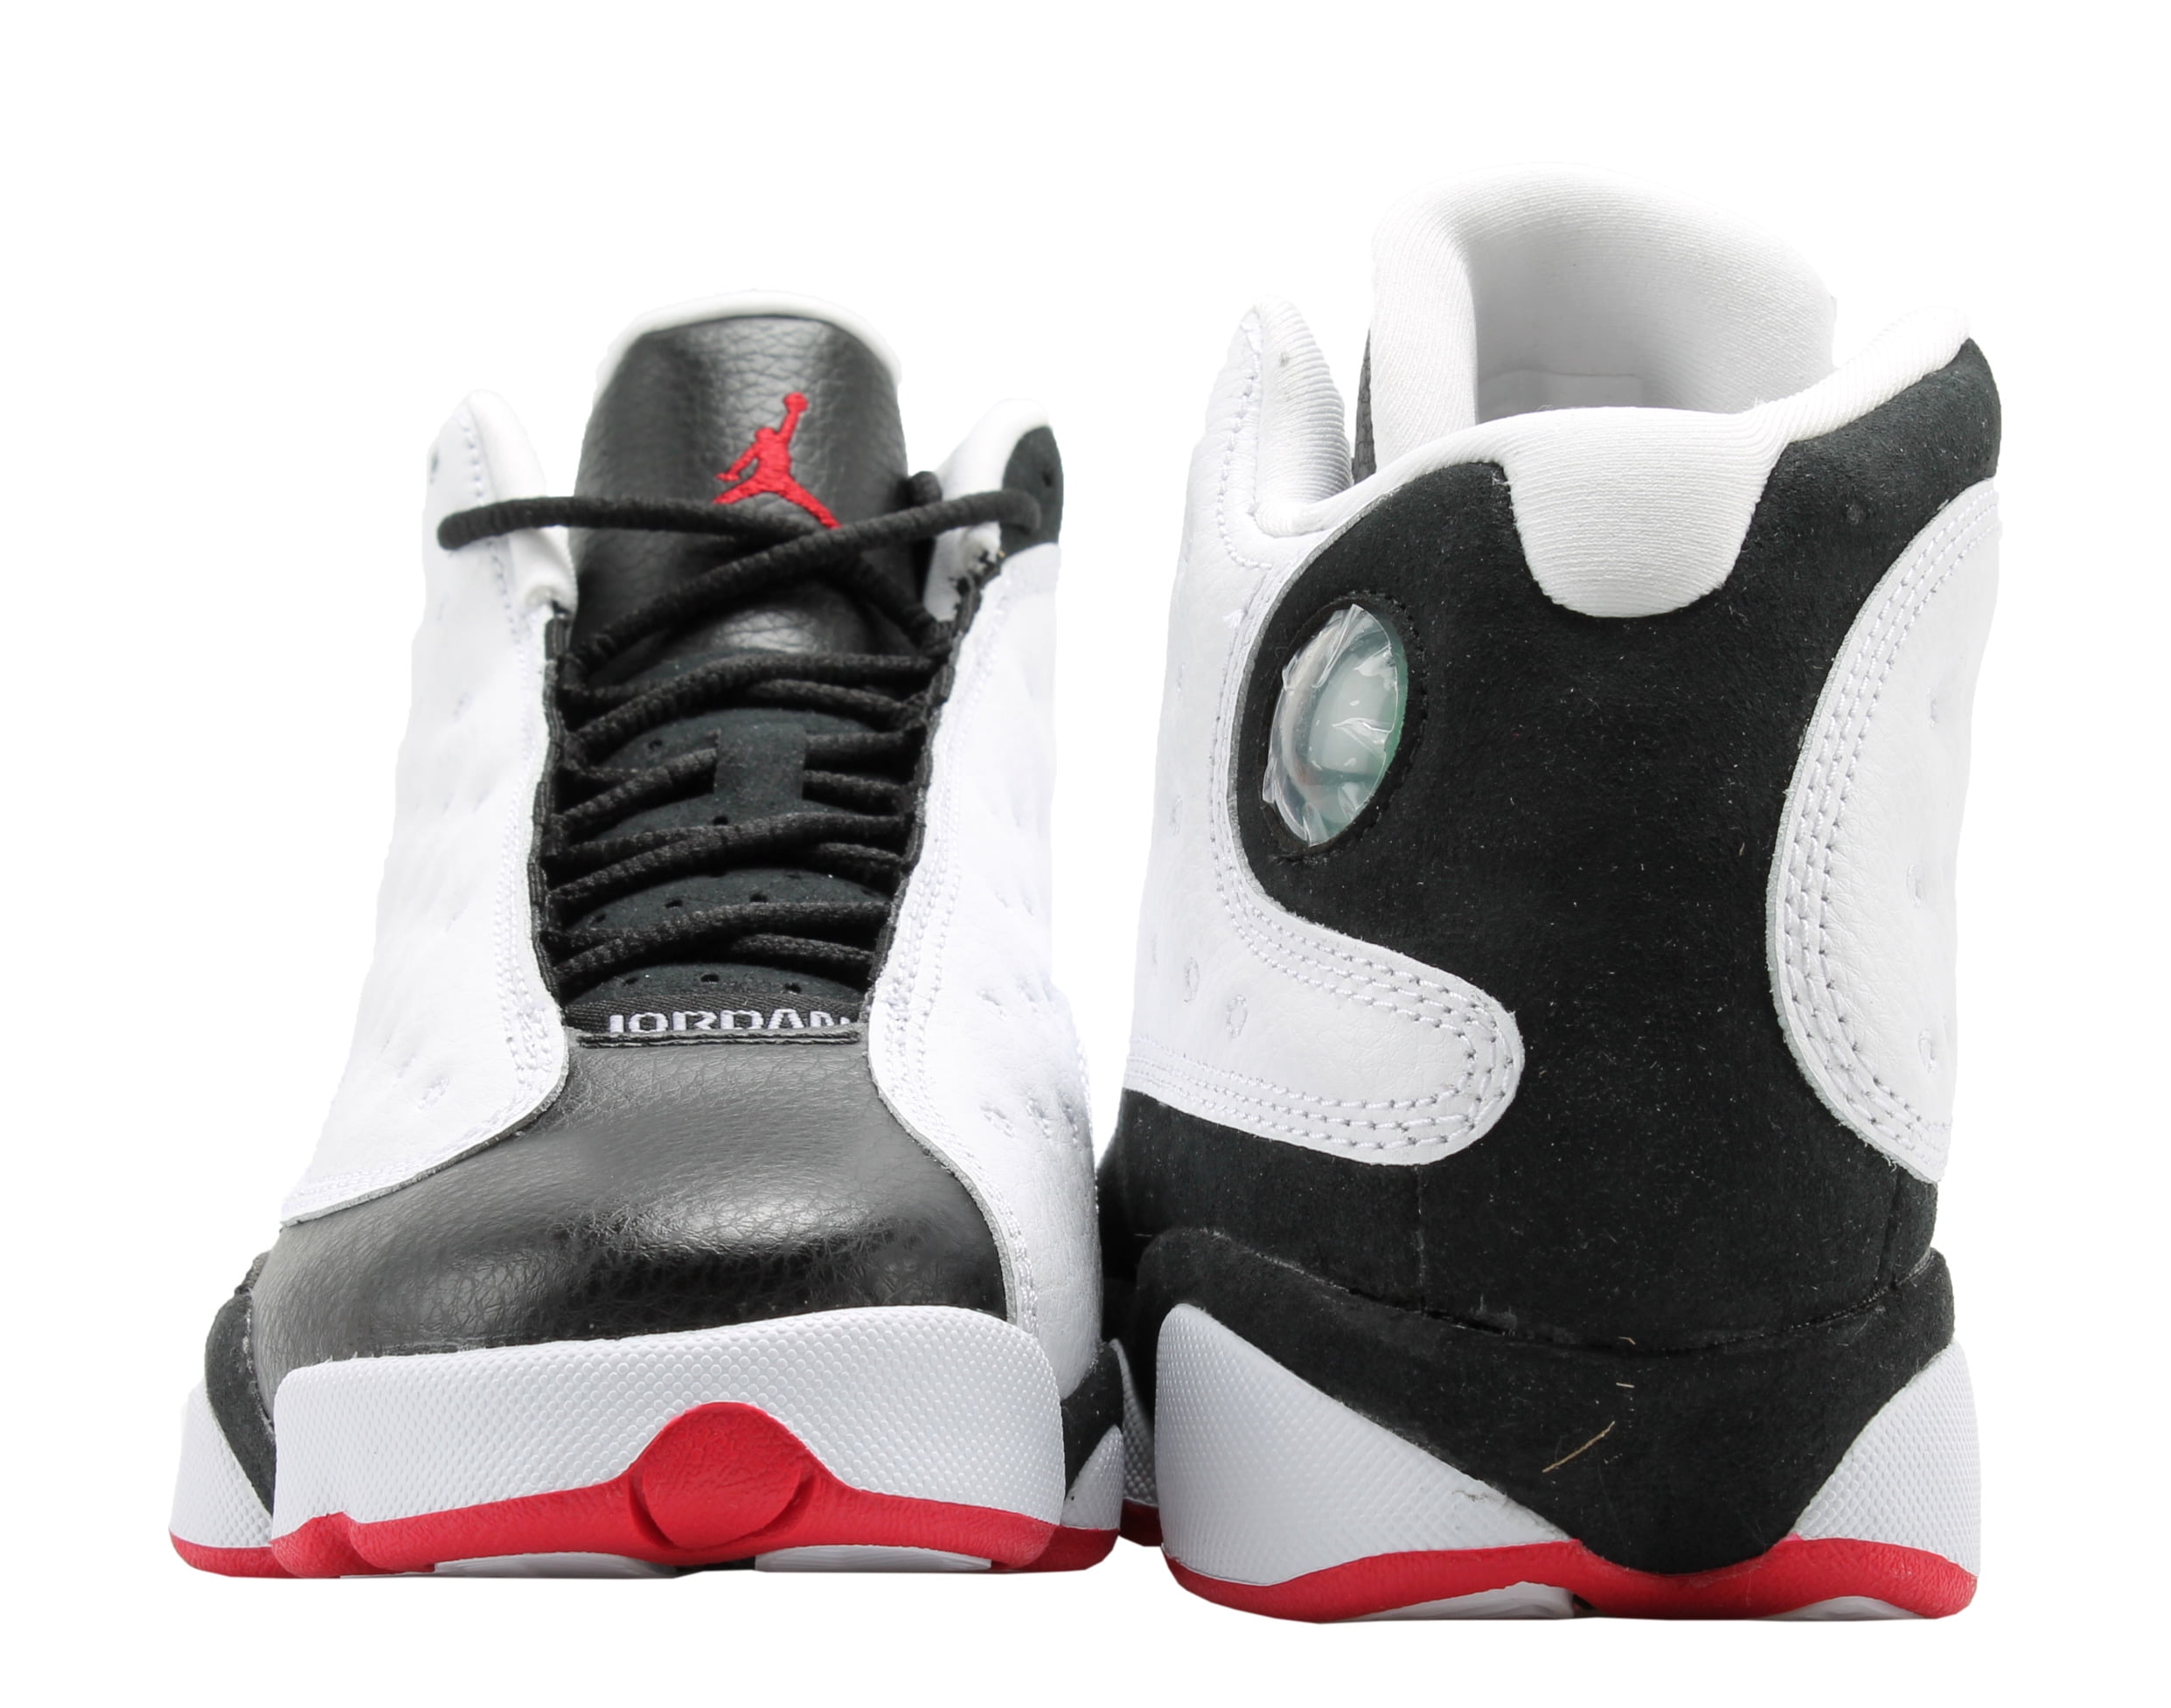 Nike Air Jordan 13 Retro XIII Bred Black Red Toddler Shoes Size 7C